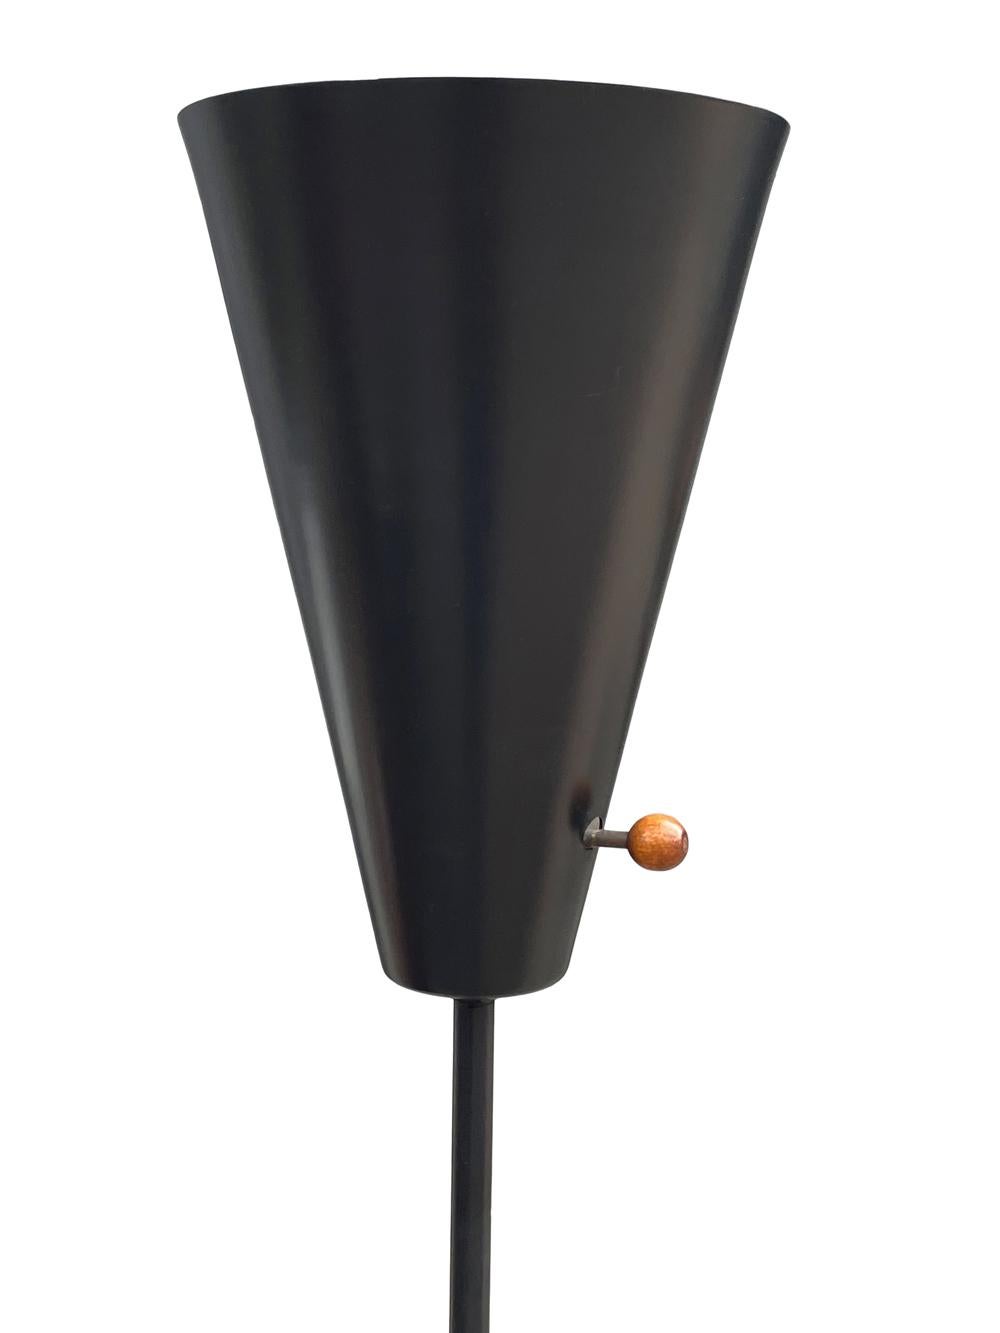 American Funky Mid Century Modern Black Enamel Floor Lamp by David Wurster for Raymor For Sale